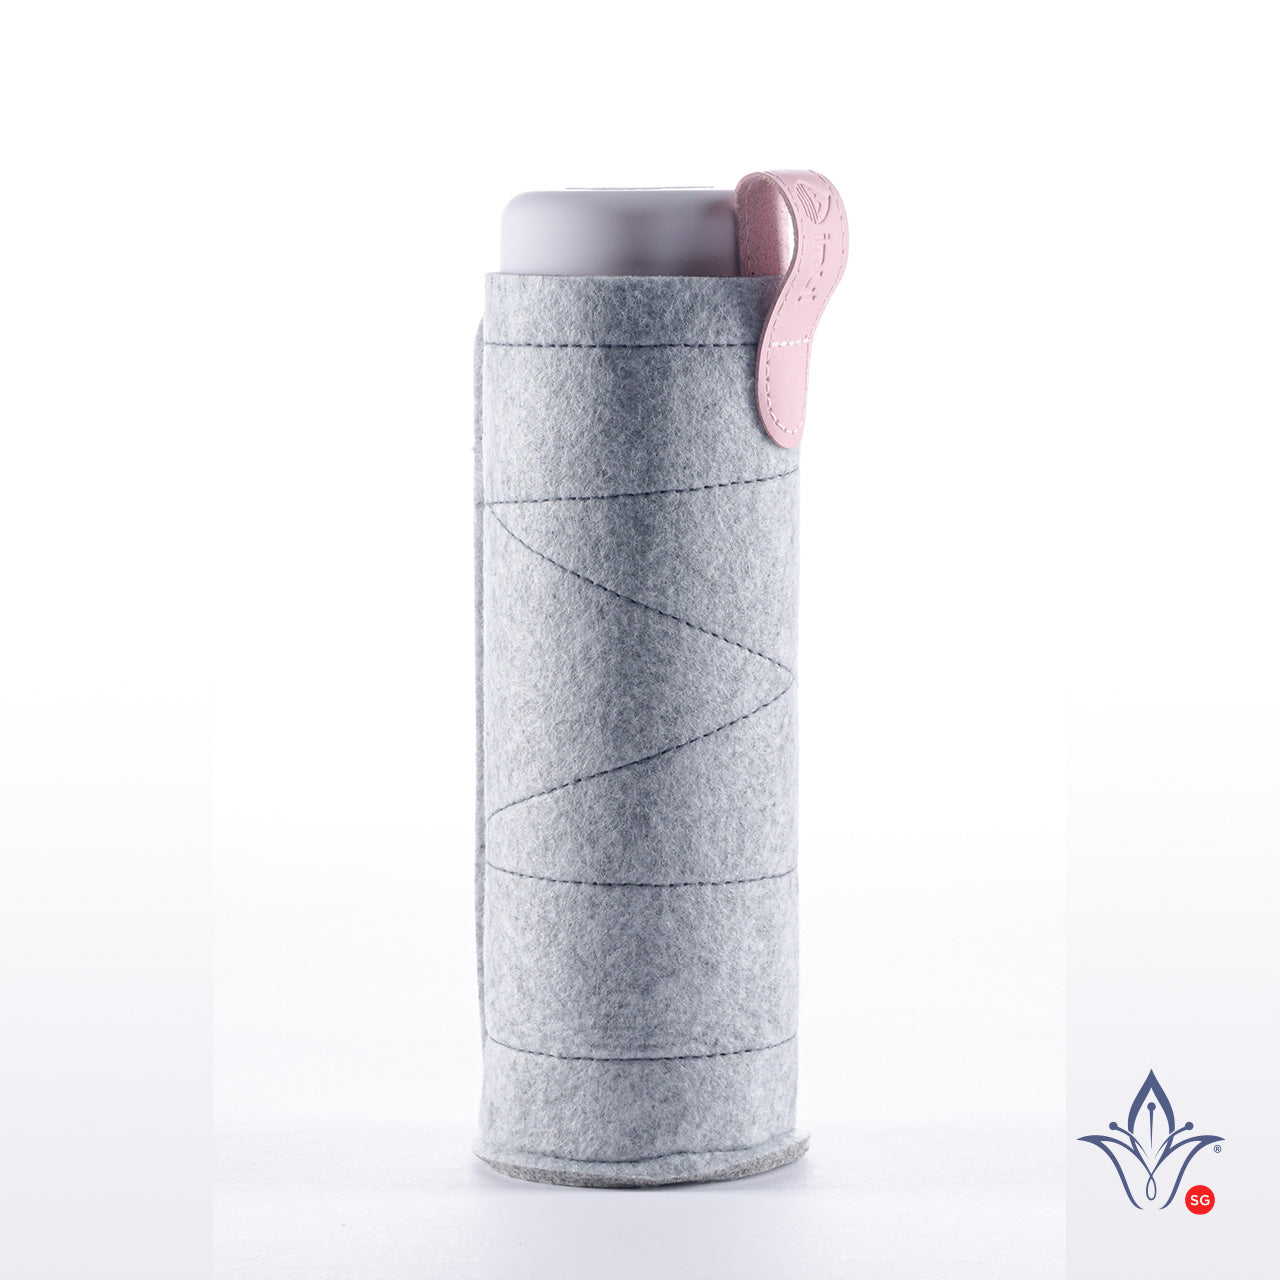 inu! Crystal Water Bottle Sleeve - Light Grey with Pink Loop